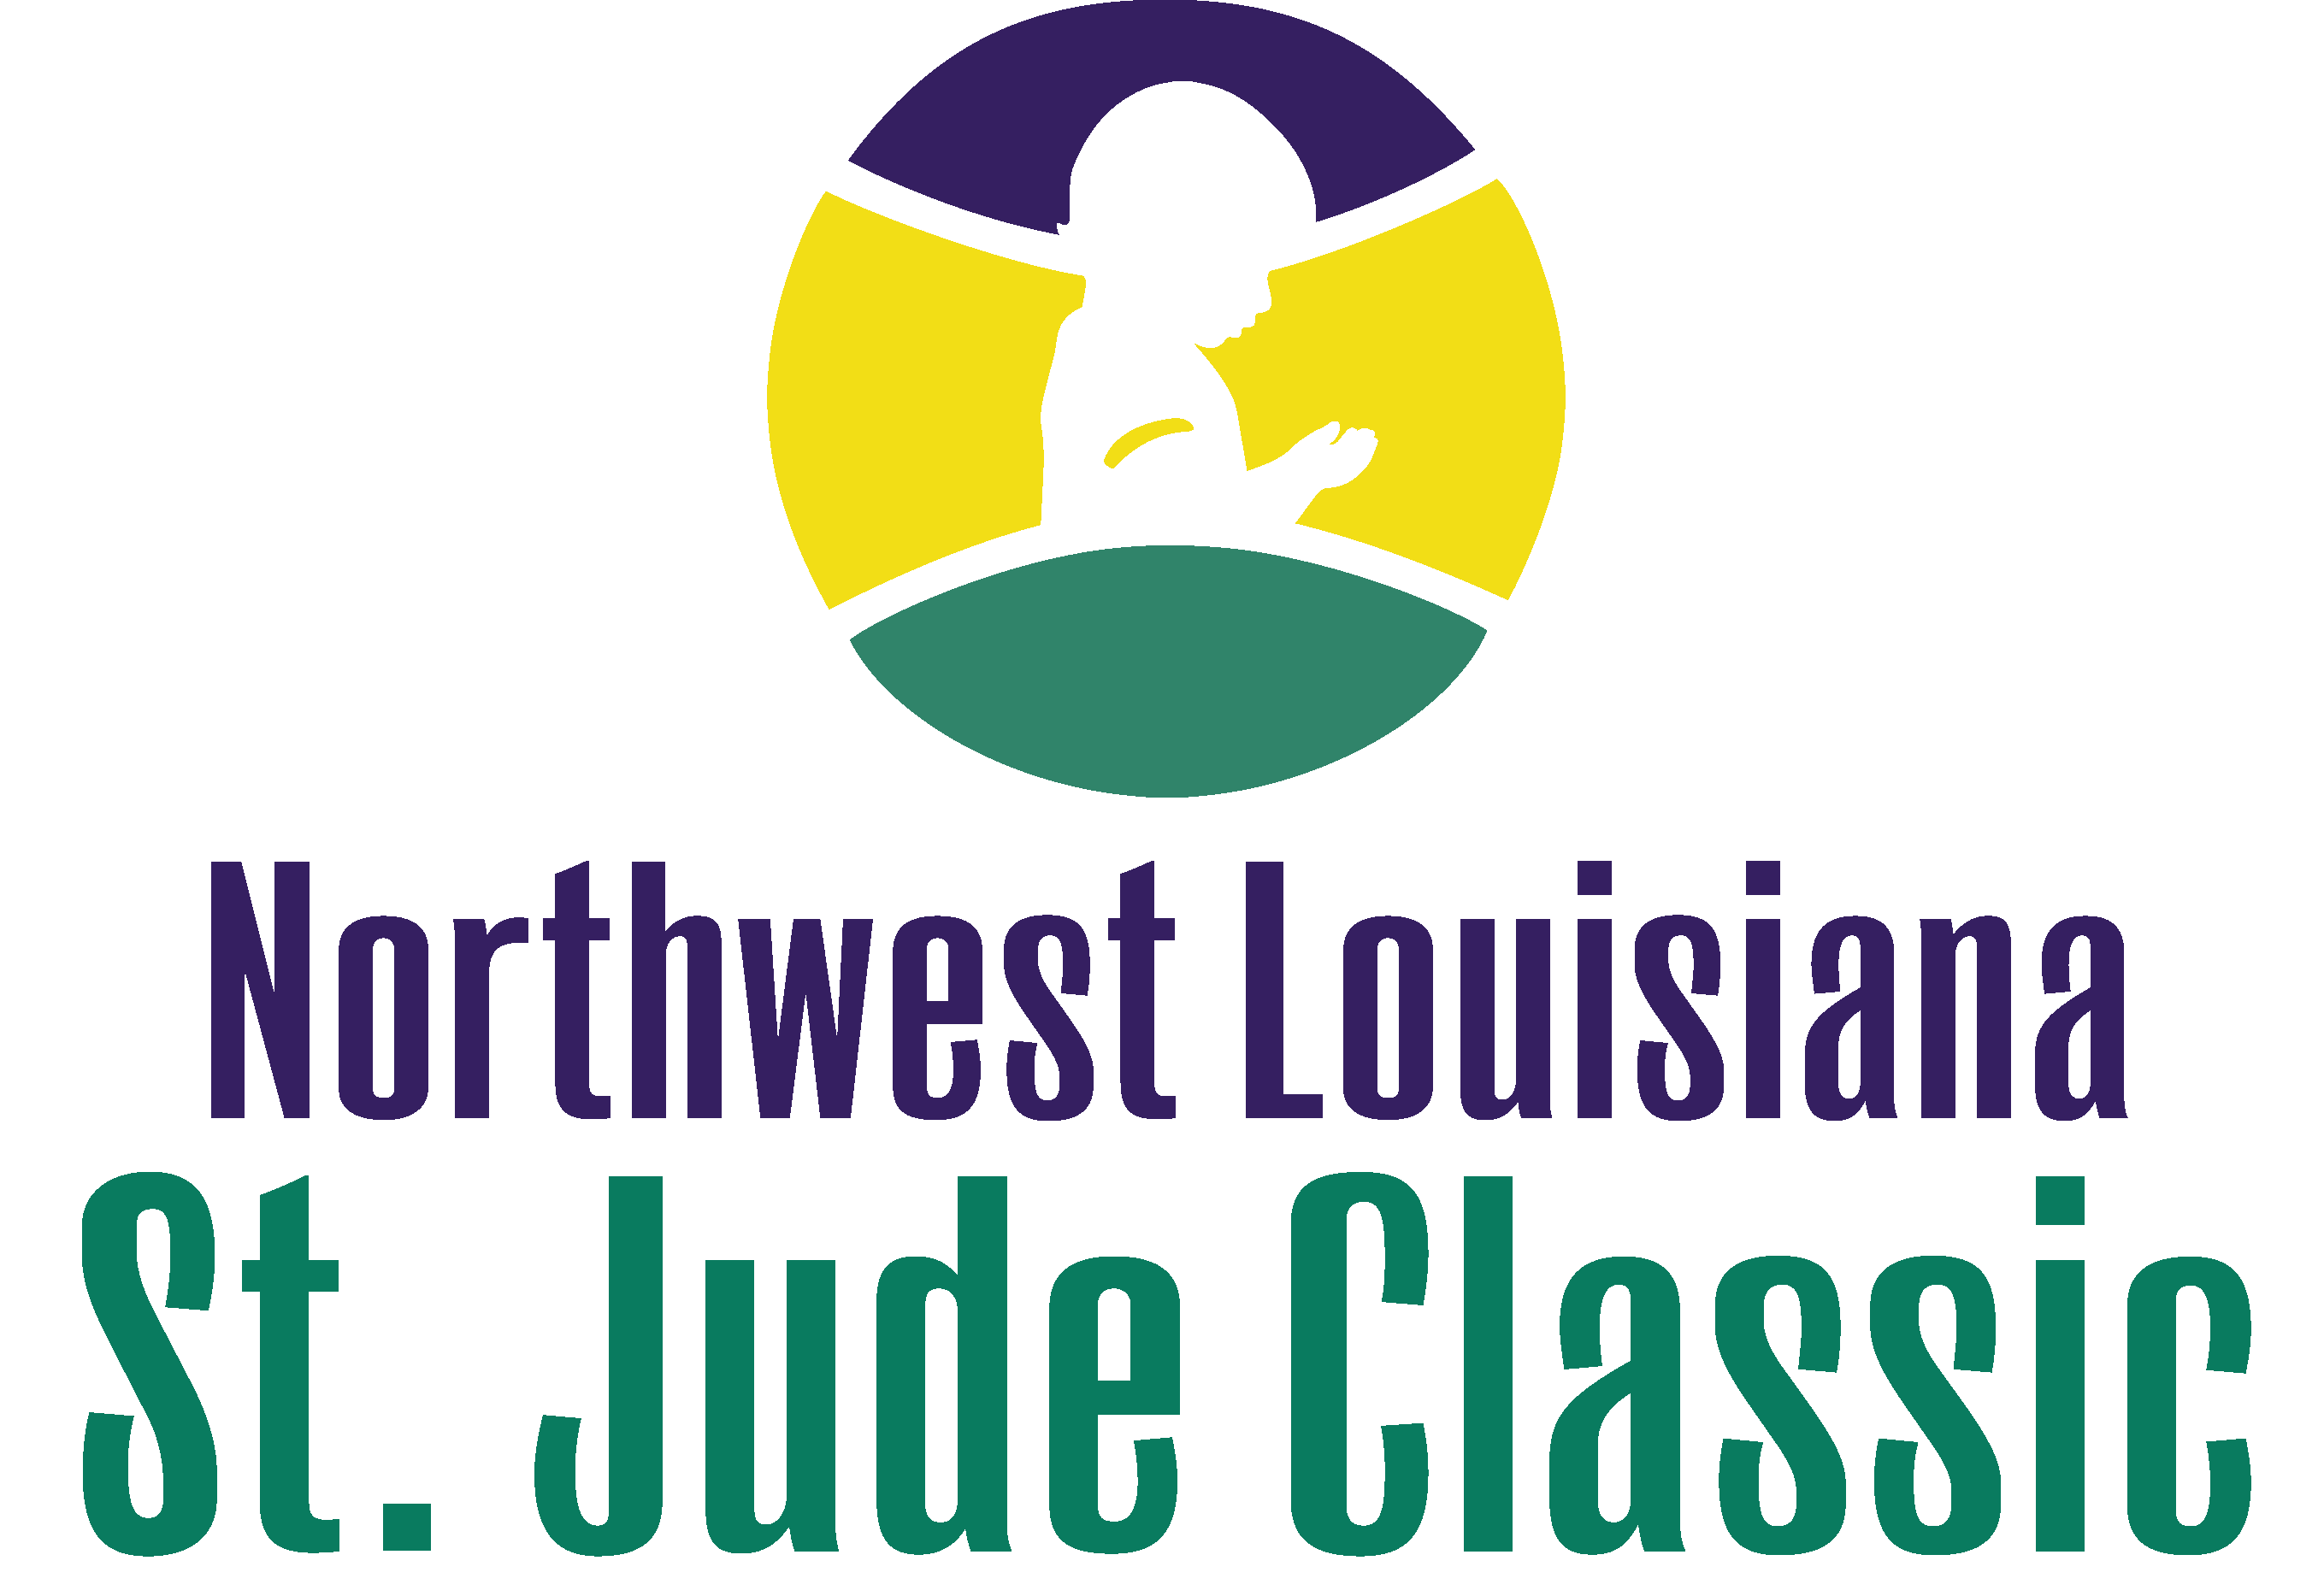 2019 St. Jude Classic Northwest Louisiana St. Jude Classic